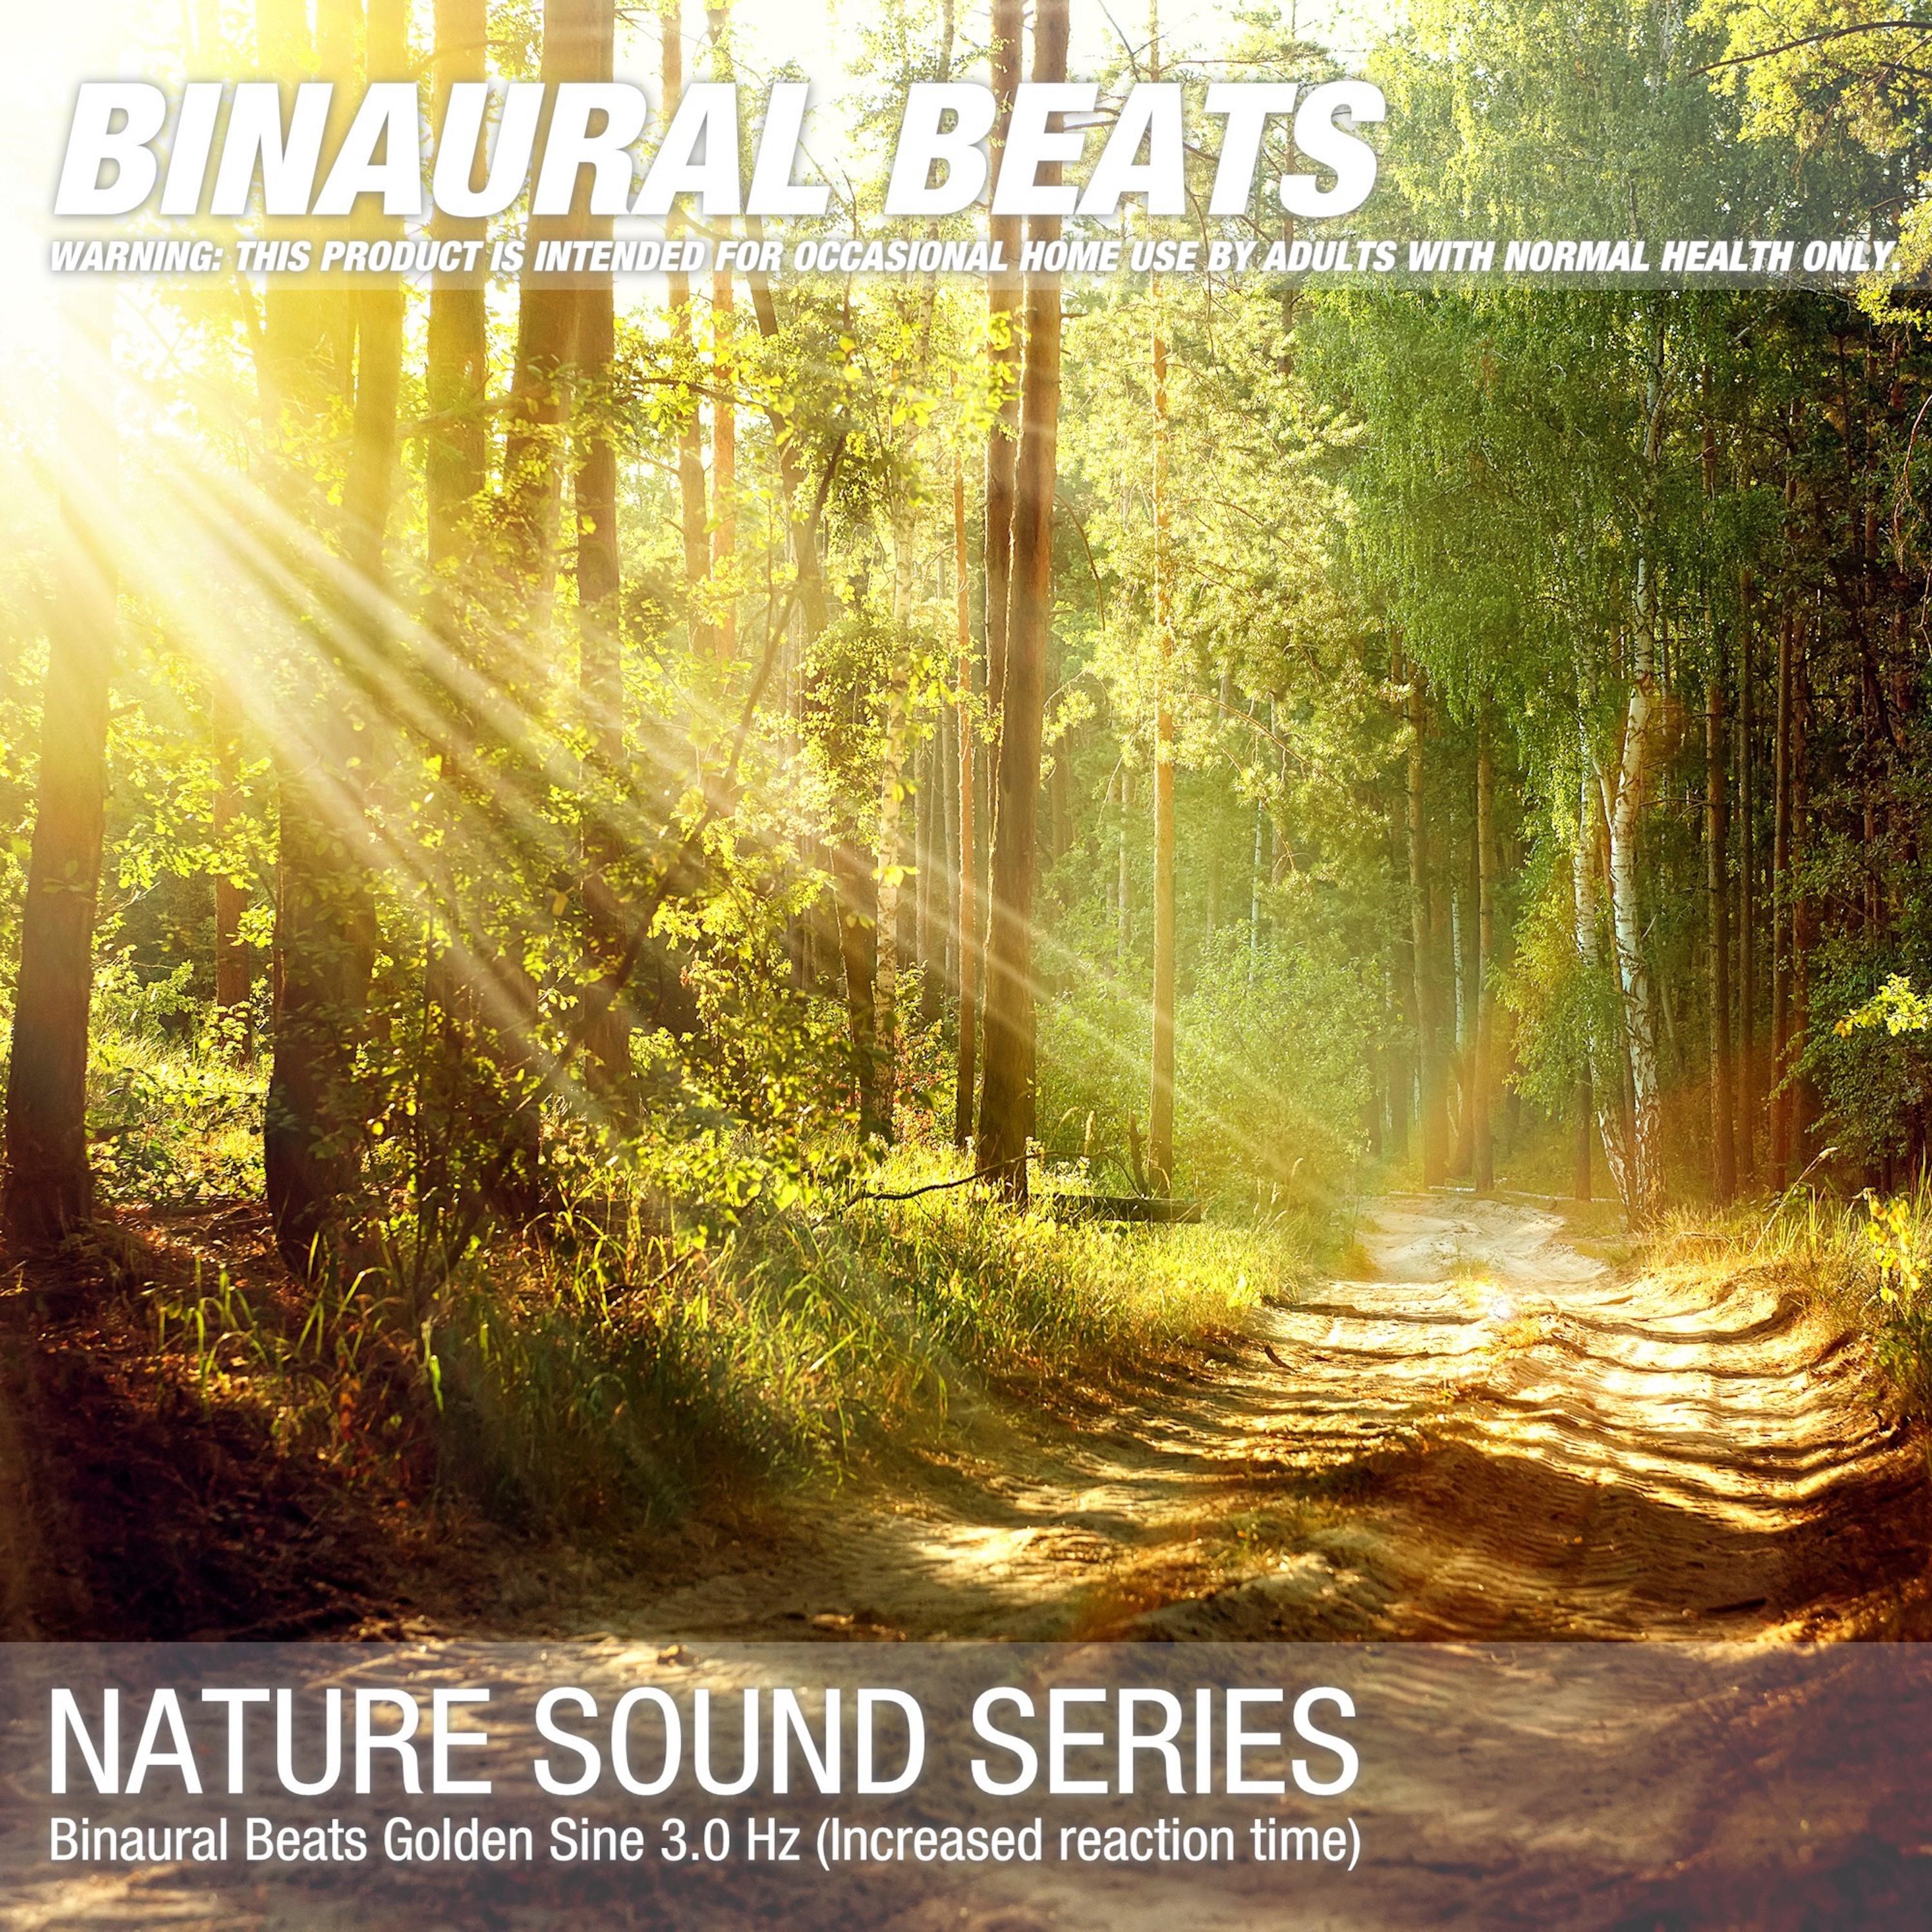 Binaural Beats Golden Sine 3.0 Hz (Increased reaction time) 03